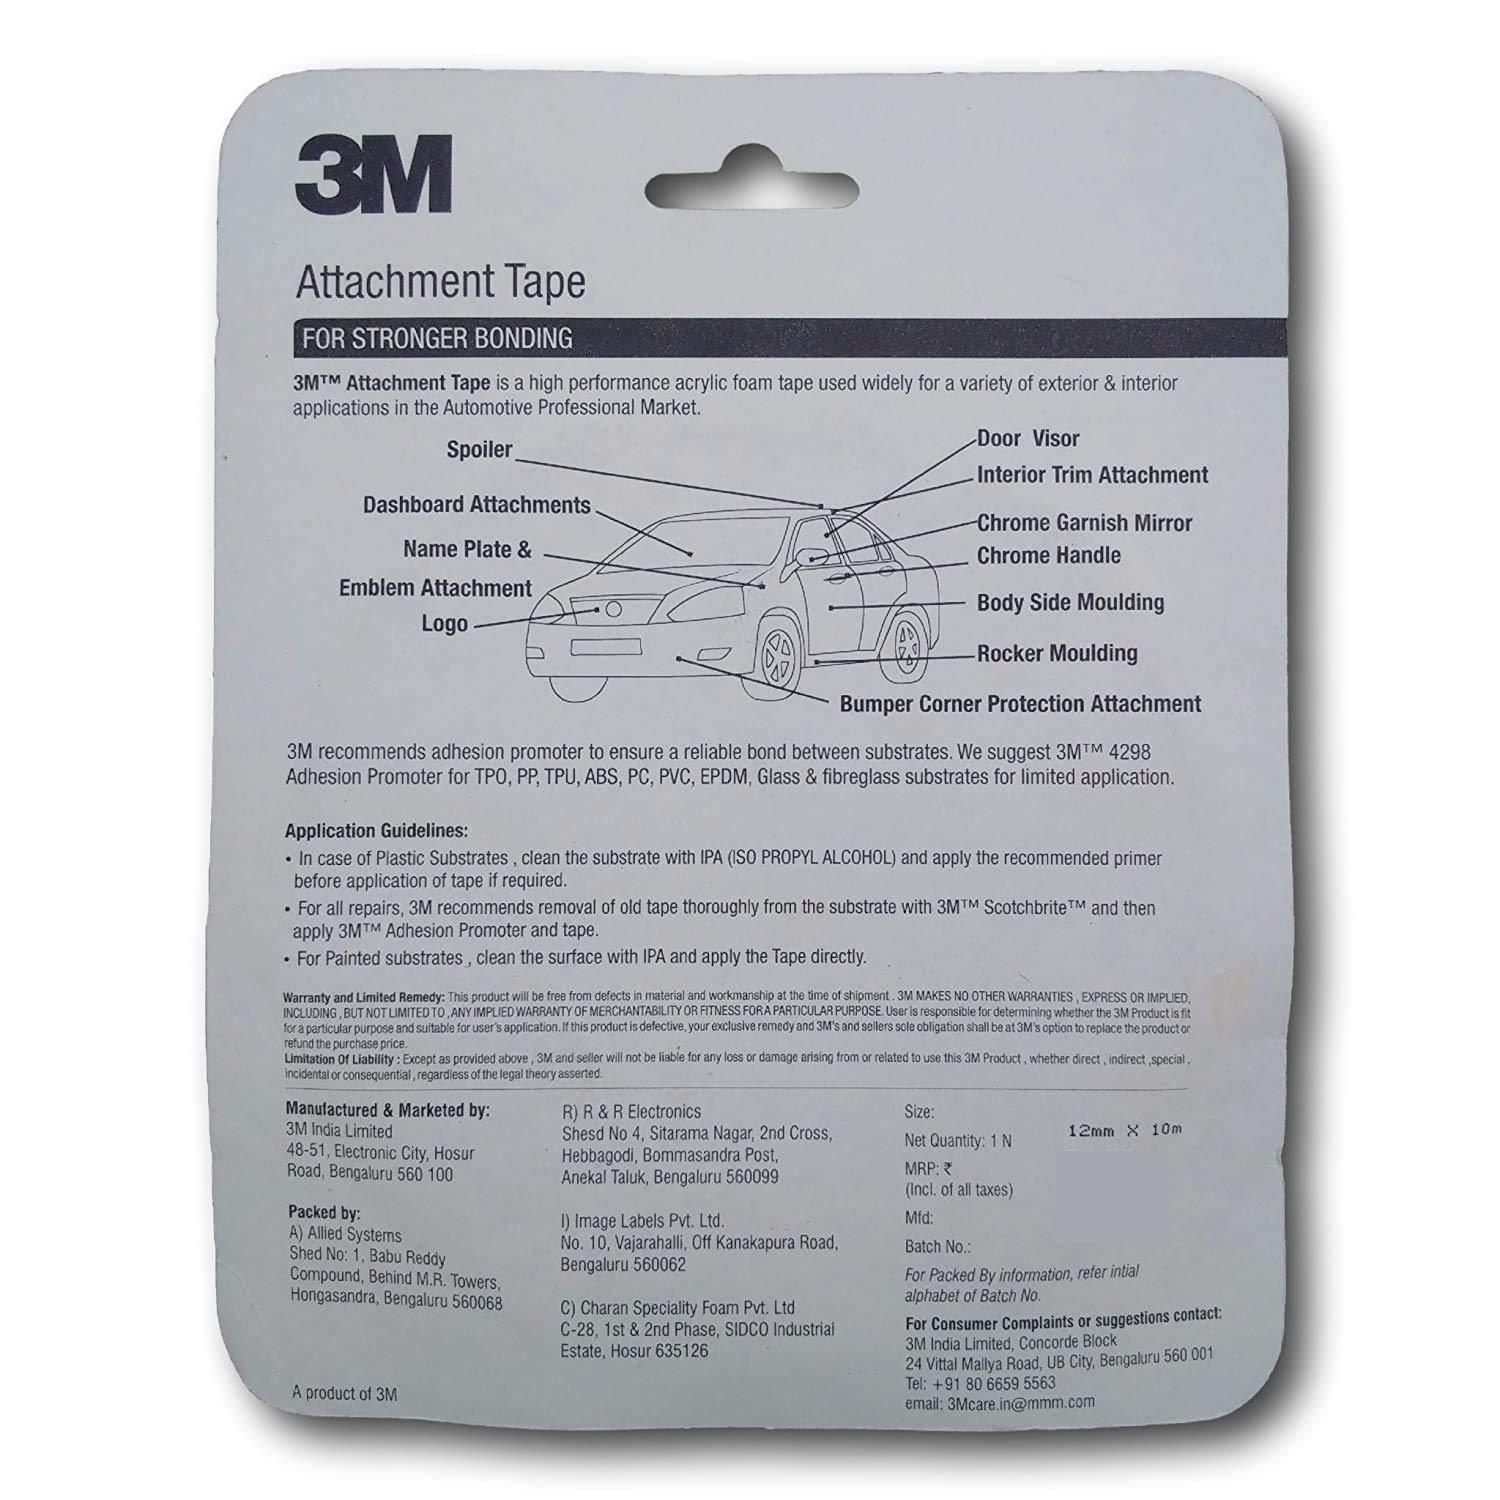 3M Attachment Tape for Stronger Bonding, Interior & Exterior Use